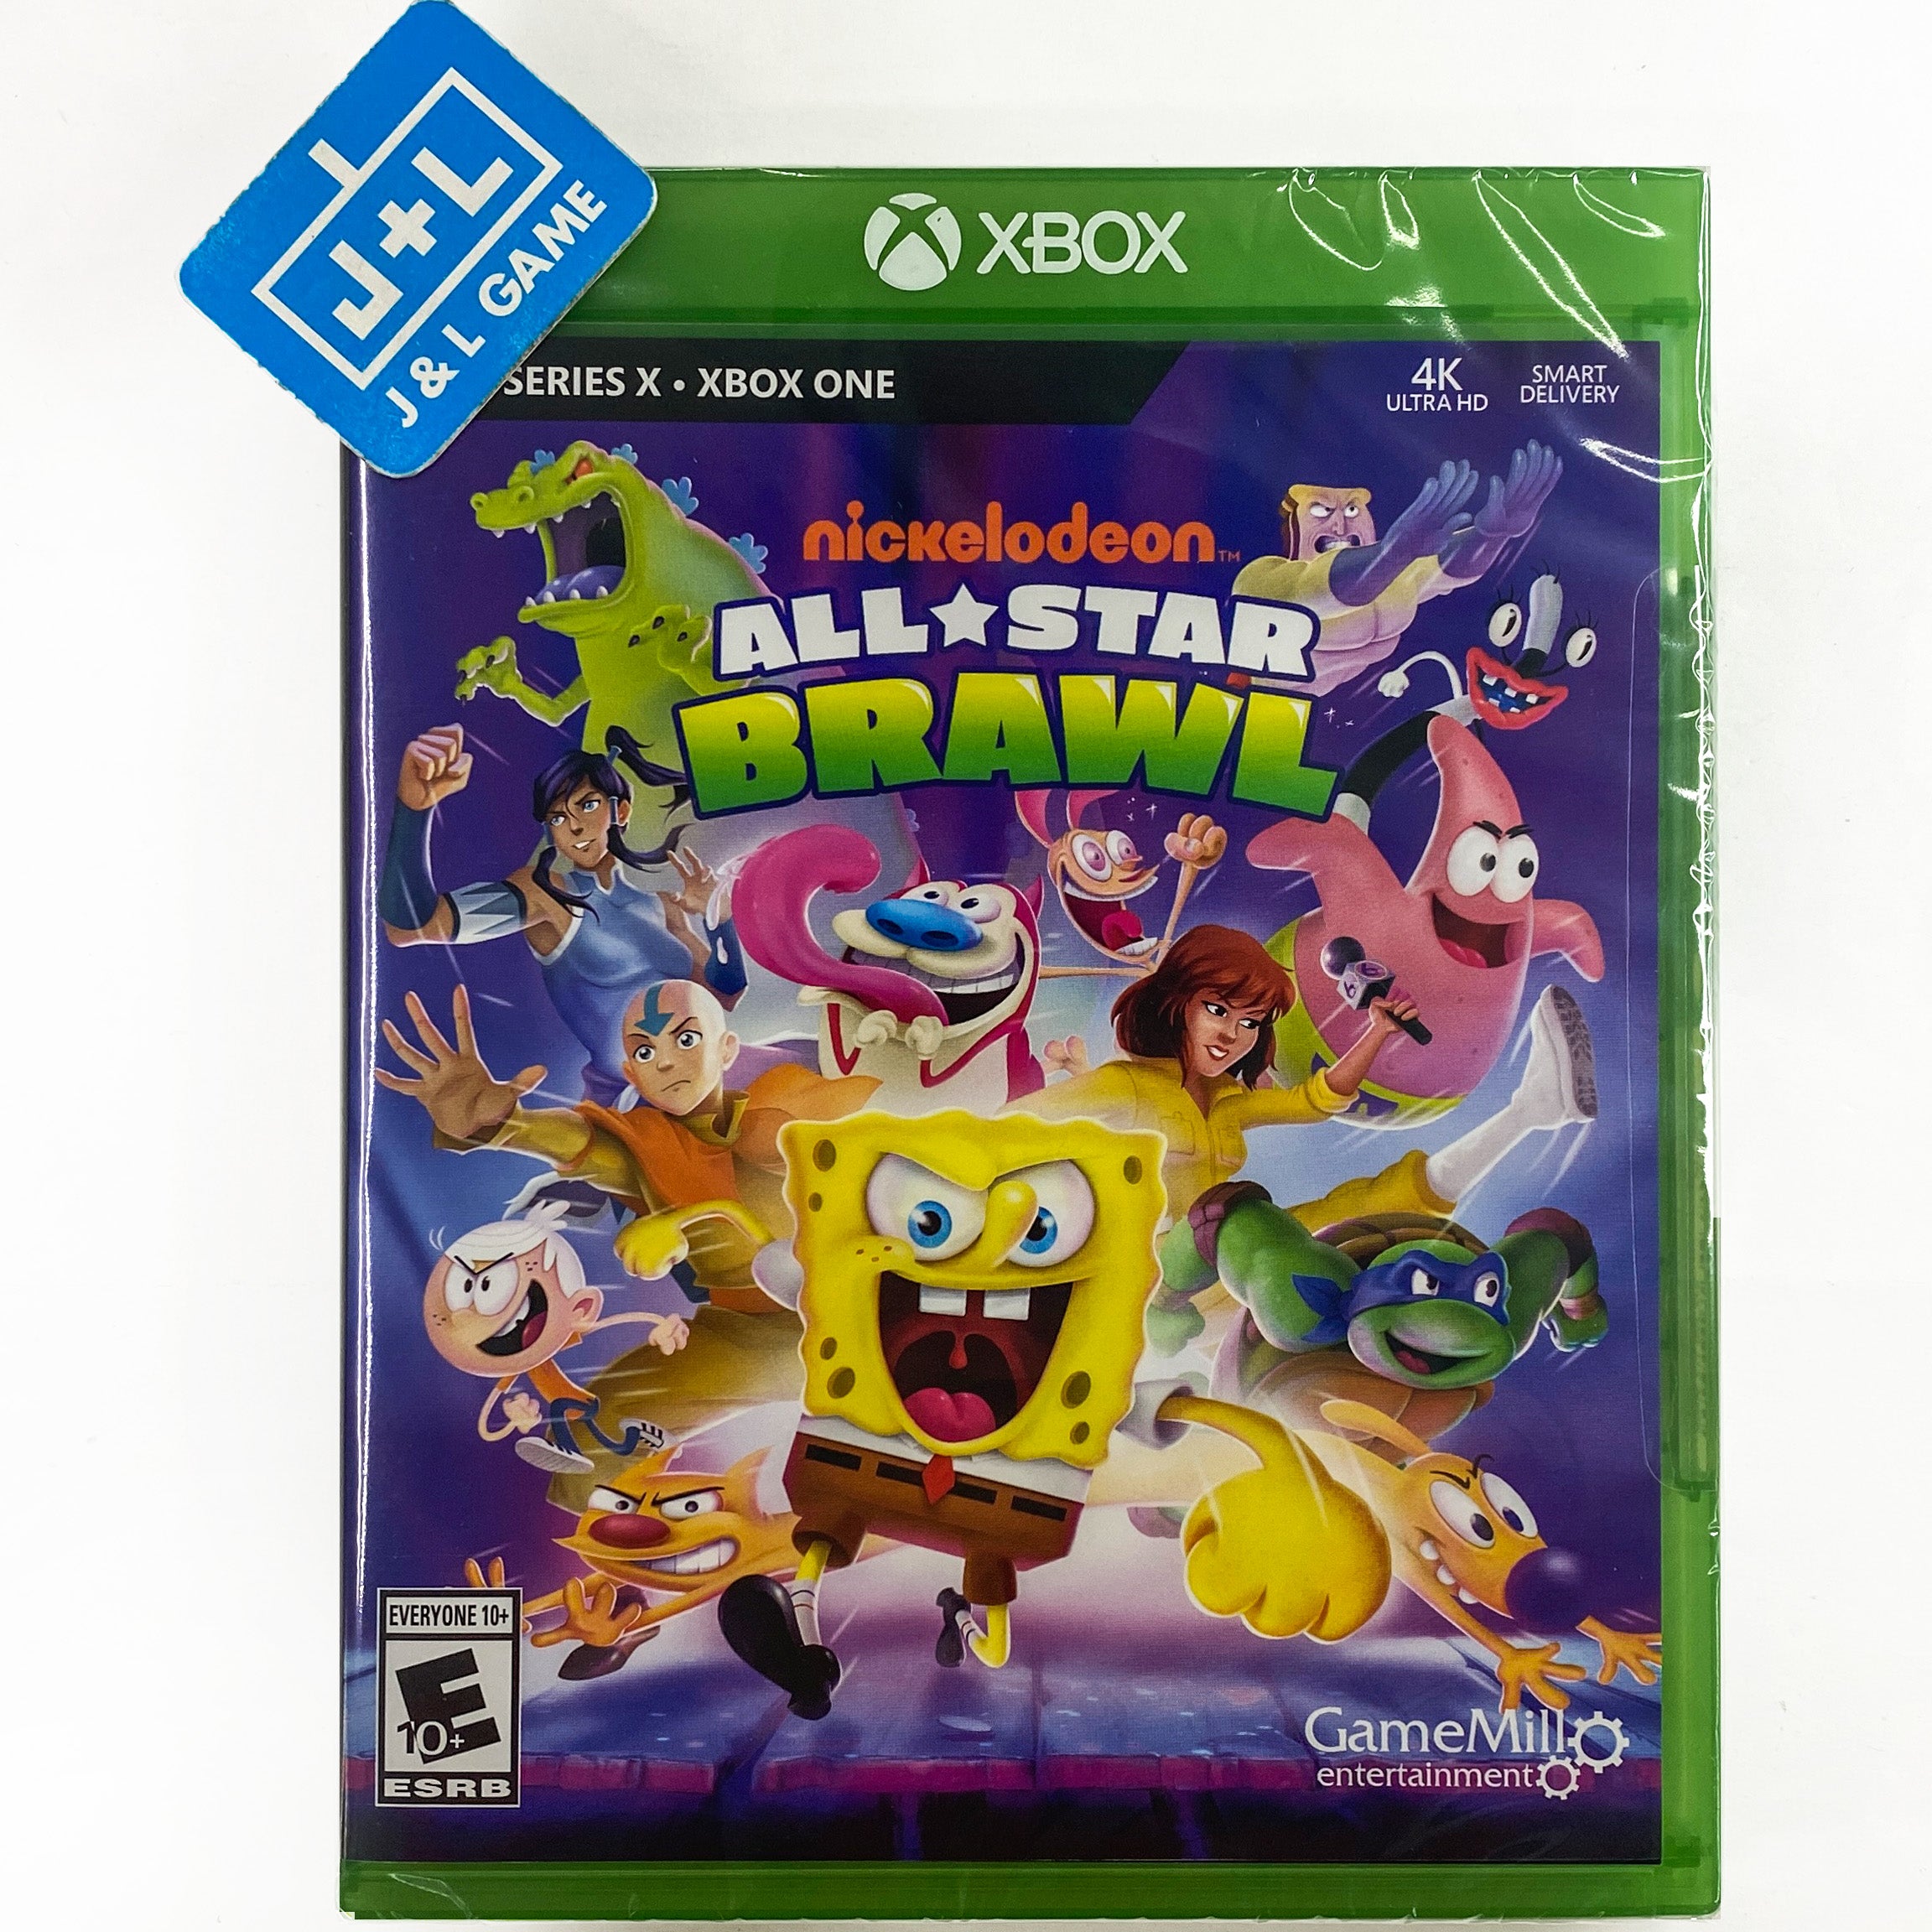 Nickelodeon All Star Brawl - (XSX) Xbox Series X Video Games Game Mill   